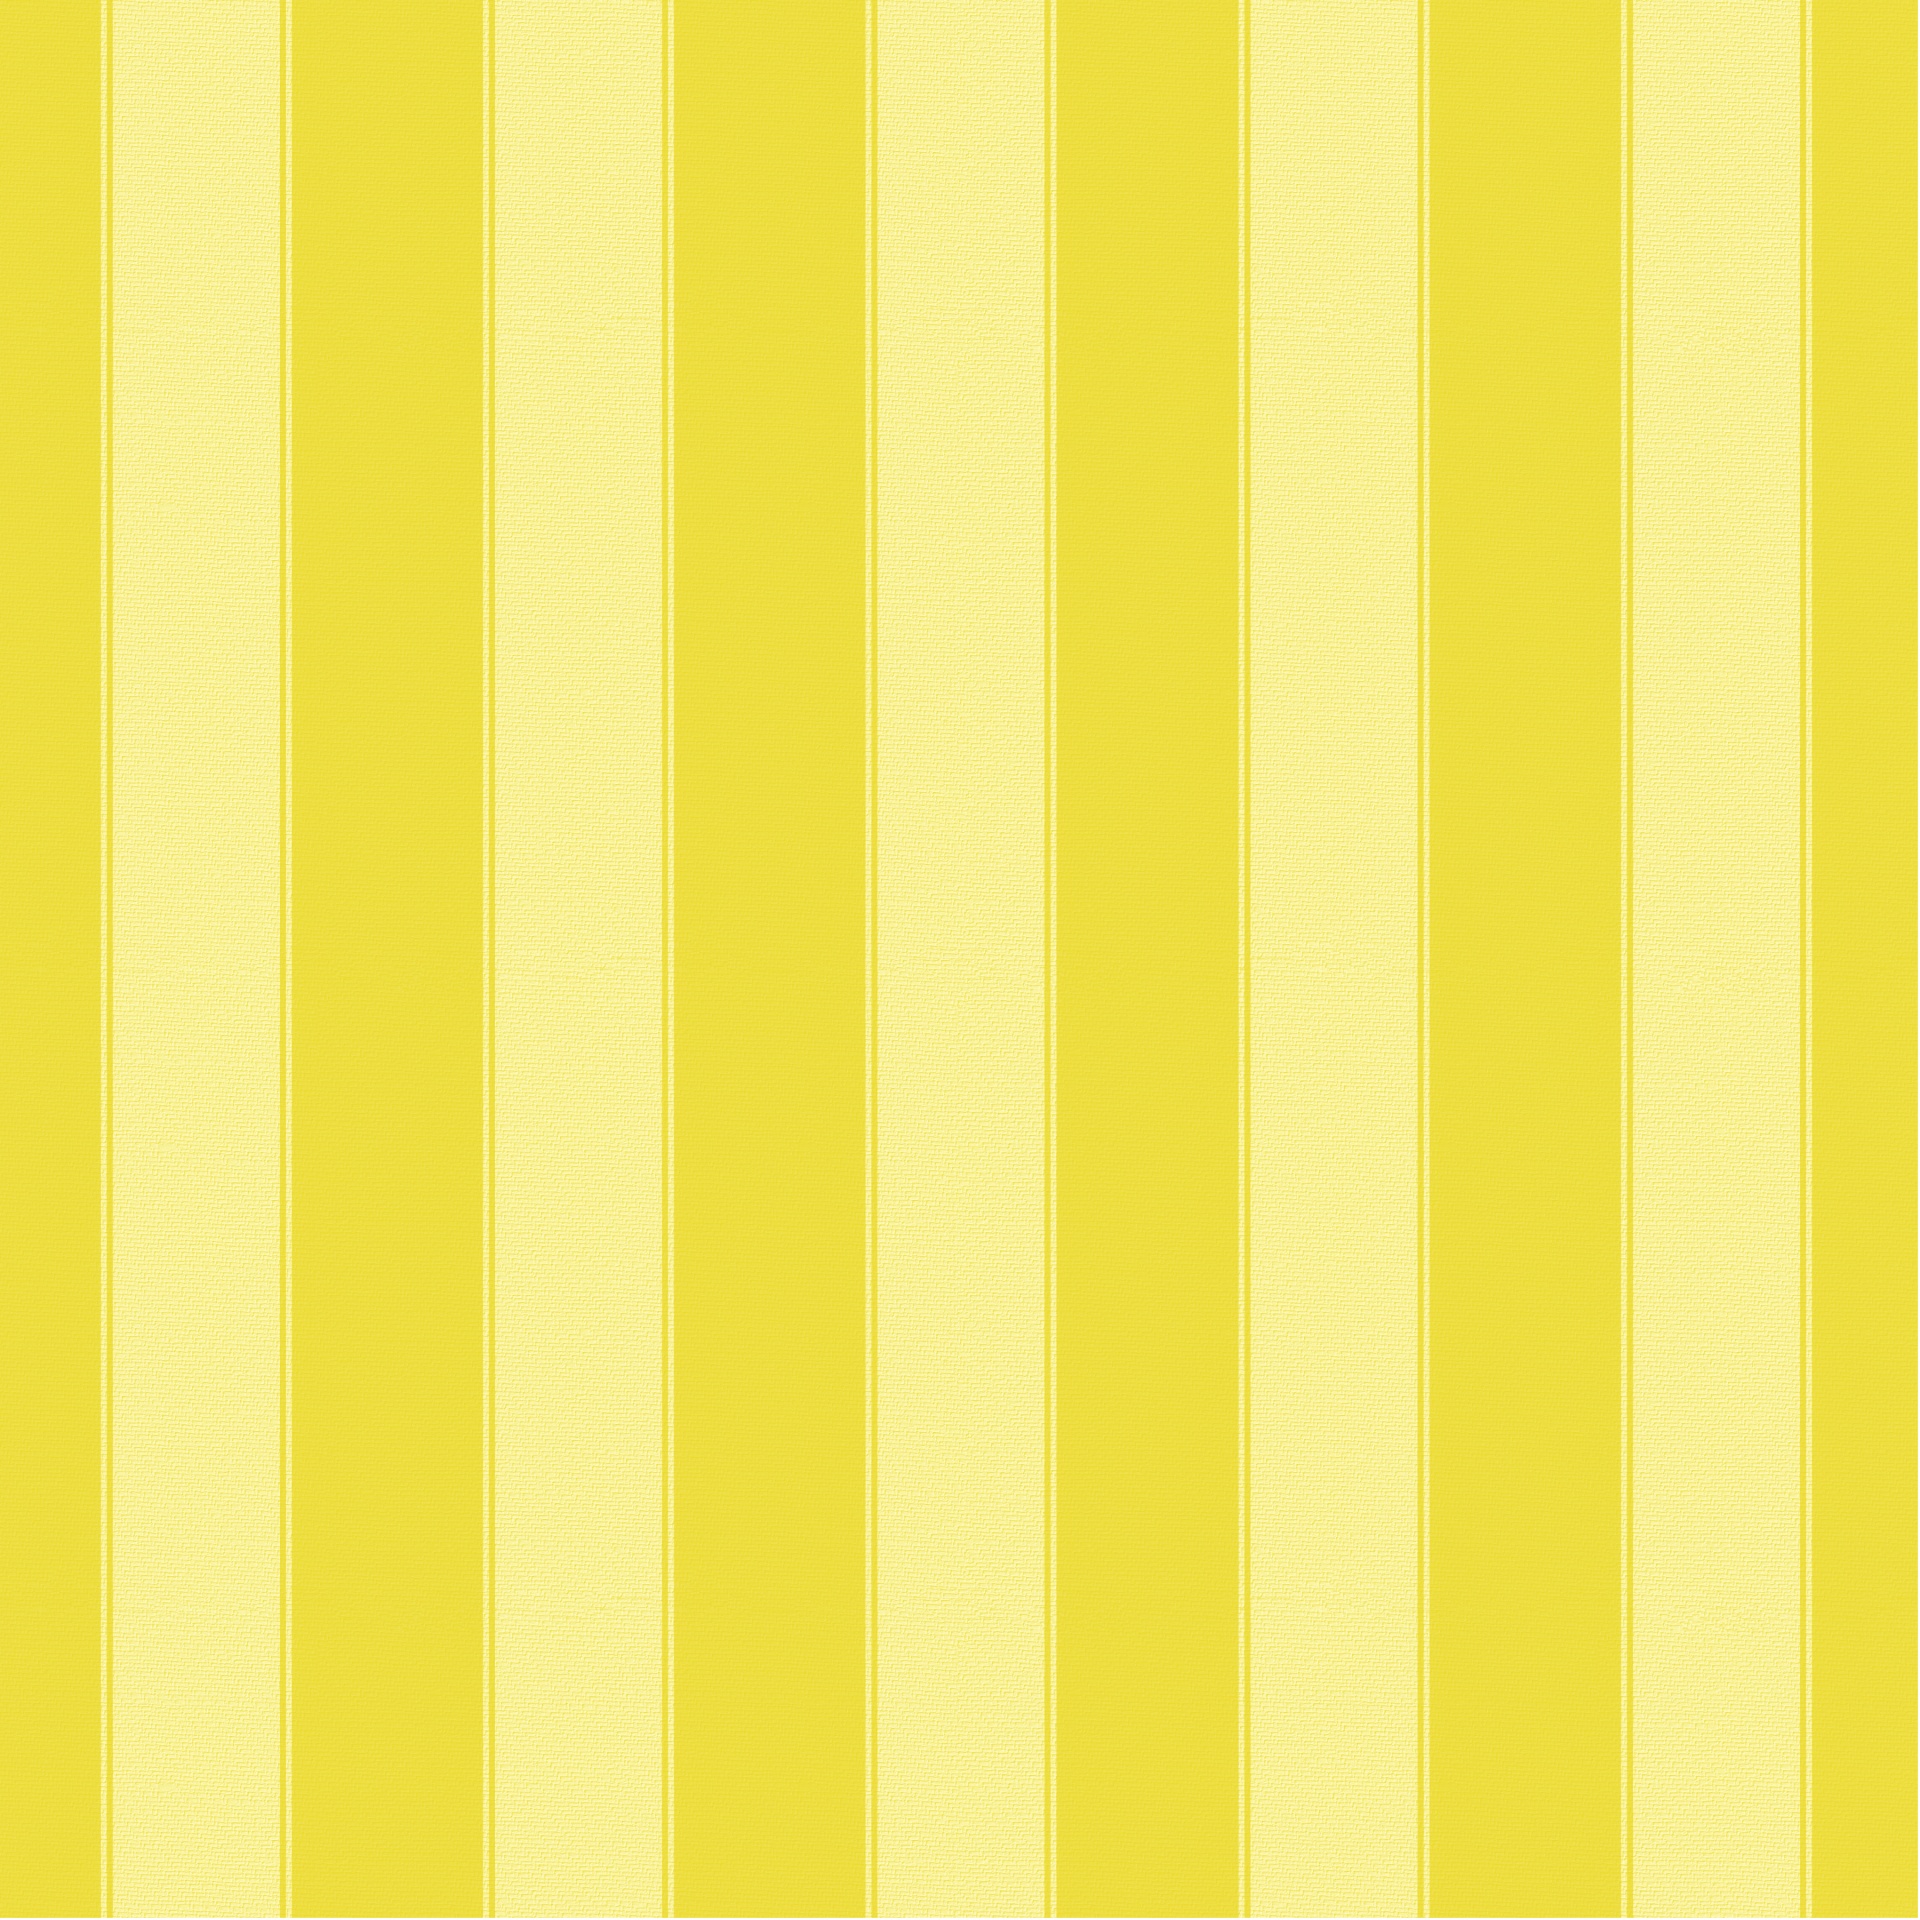 Yellow stripes Stock Photos, Royalty Free Yellow stripes Images